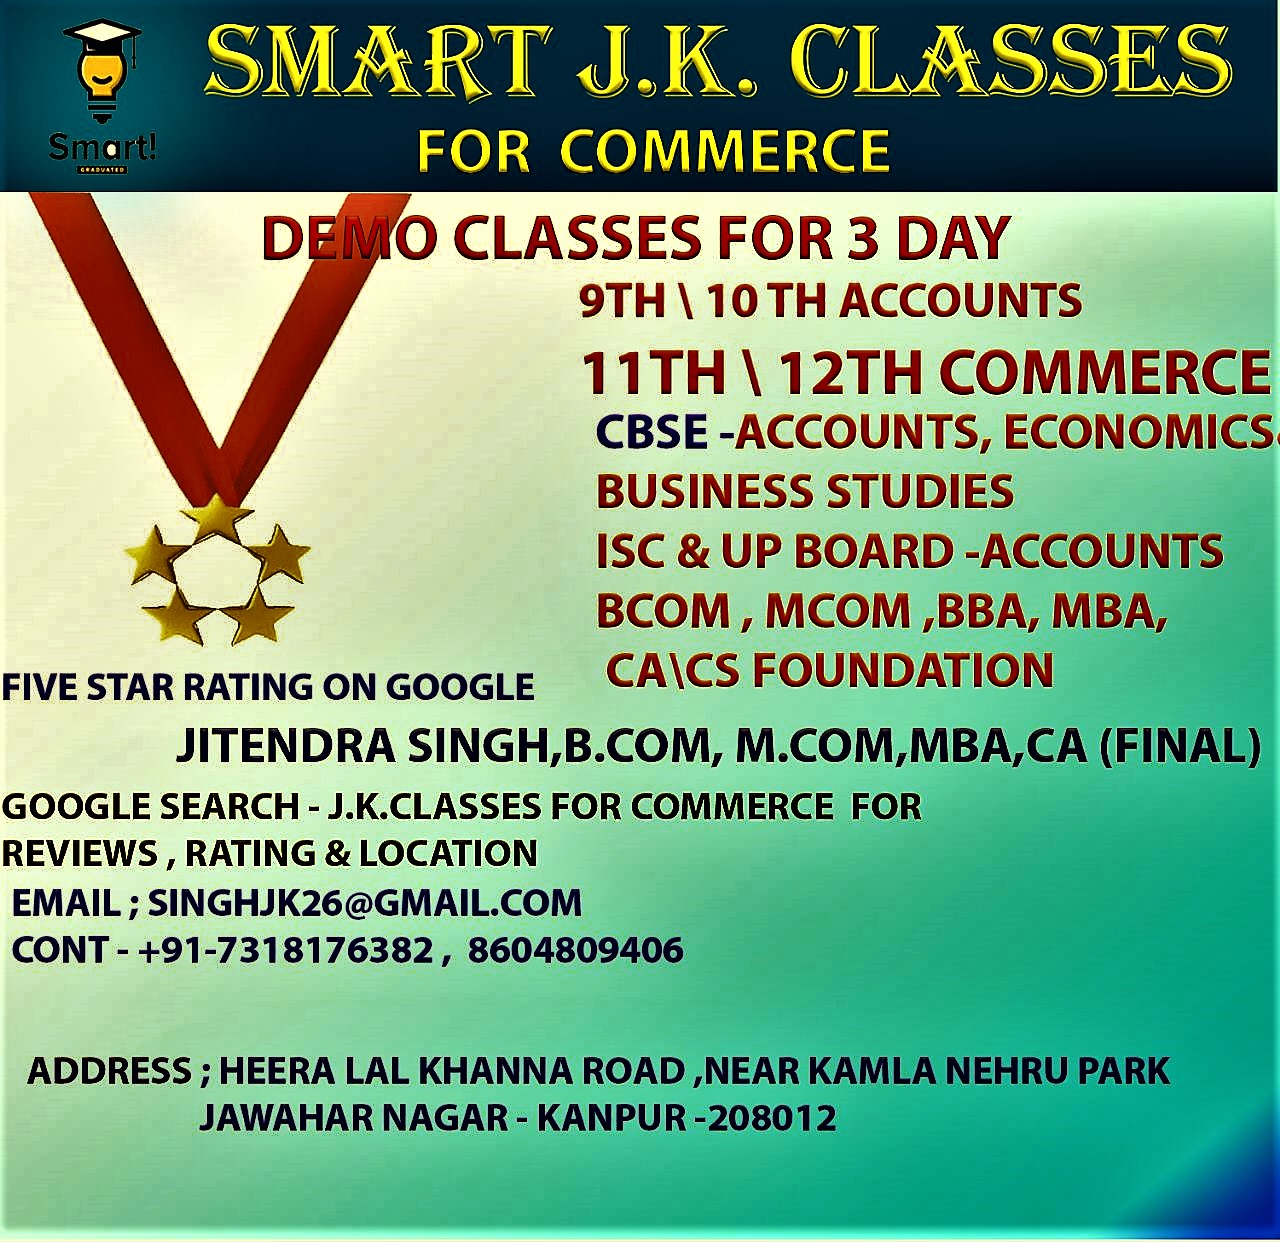 24101SMART JK CLASSES FOR COMMERCE
Class 11th & 12th B.Com M.Com BBA MBA CA/CMA Inter